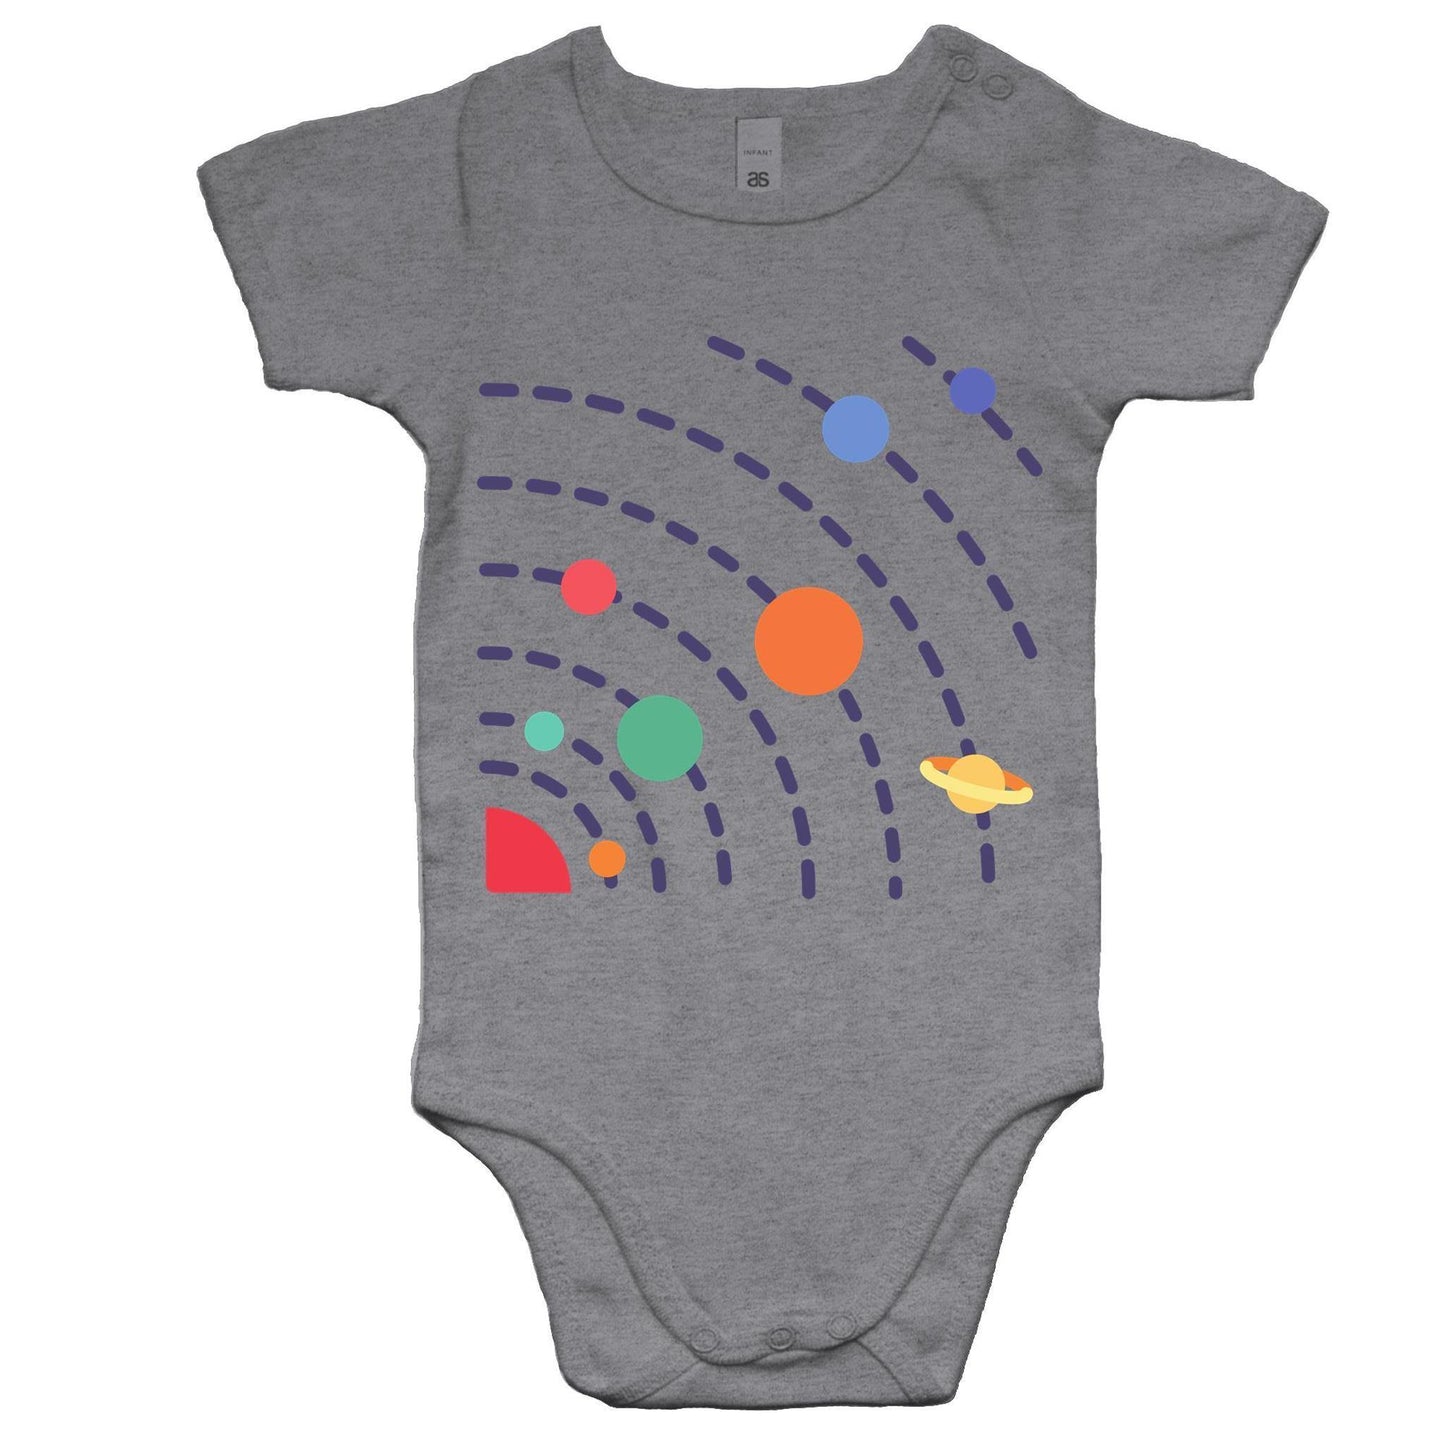 Solar System - Baby Bodysuit Grey Marle Baby Bodysuit kids Science Space